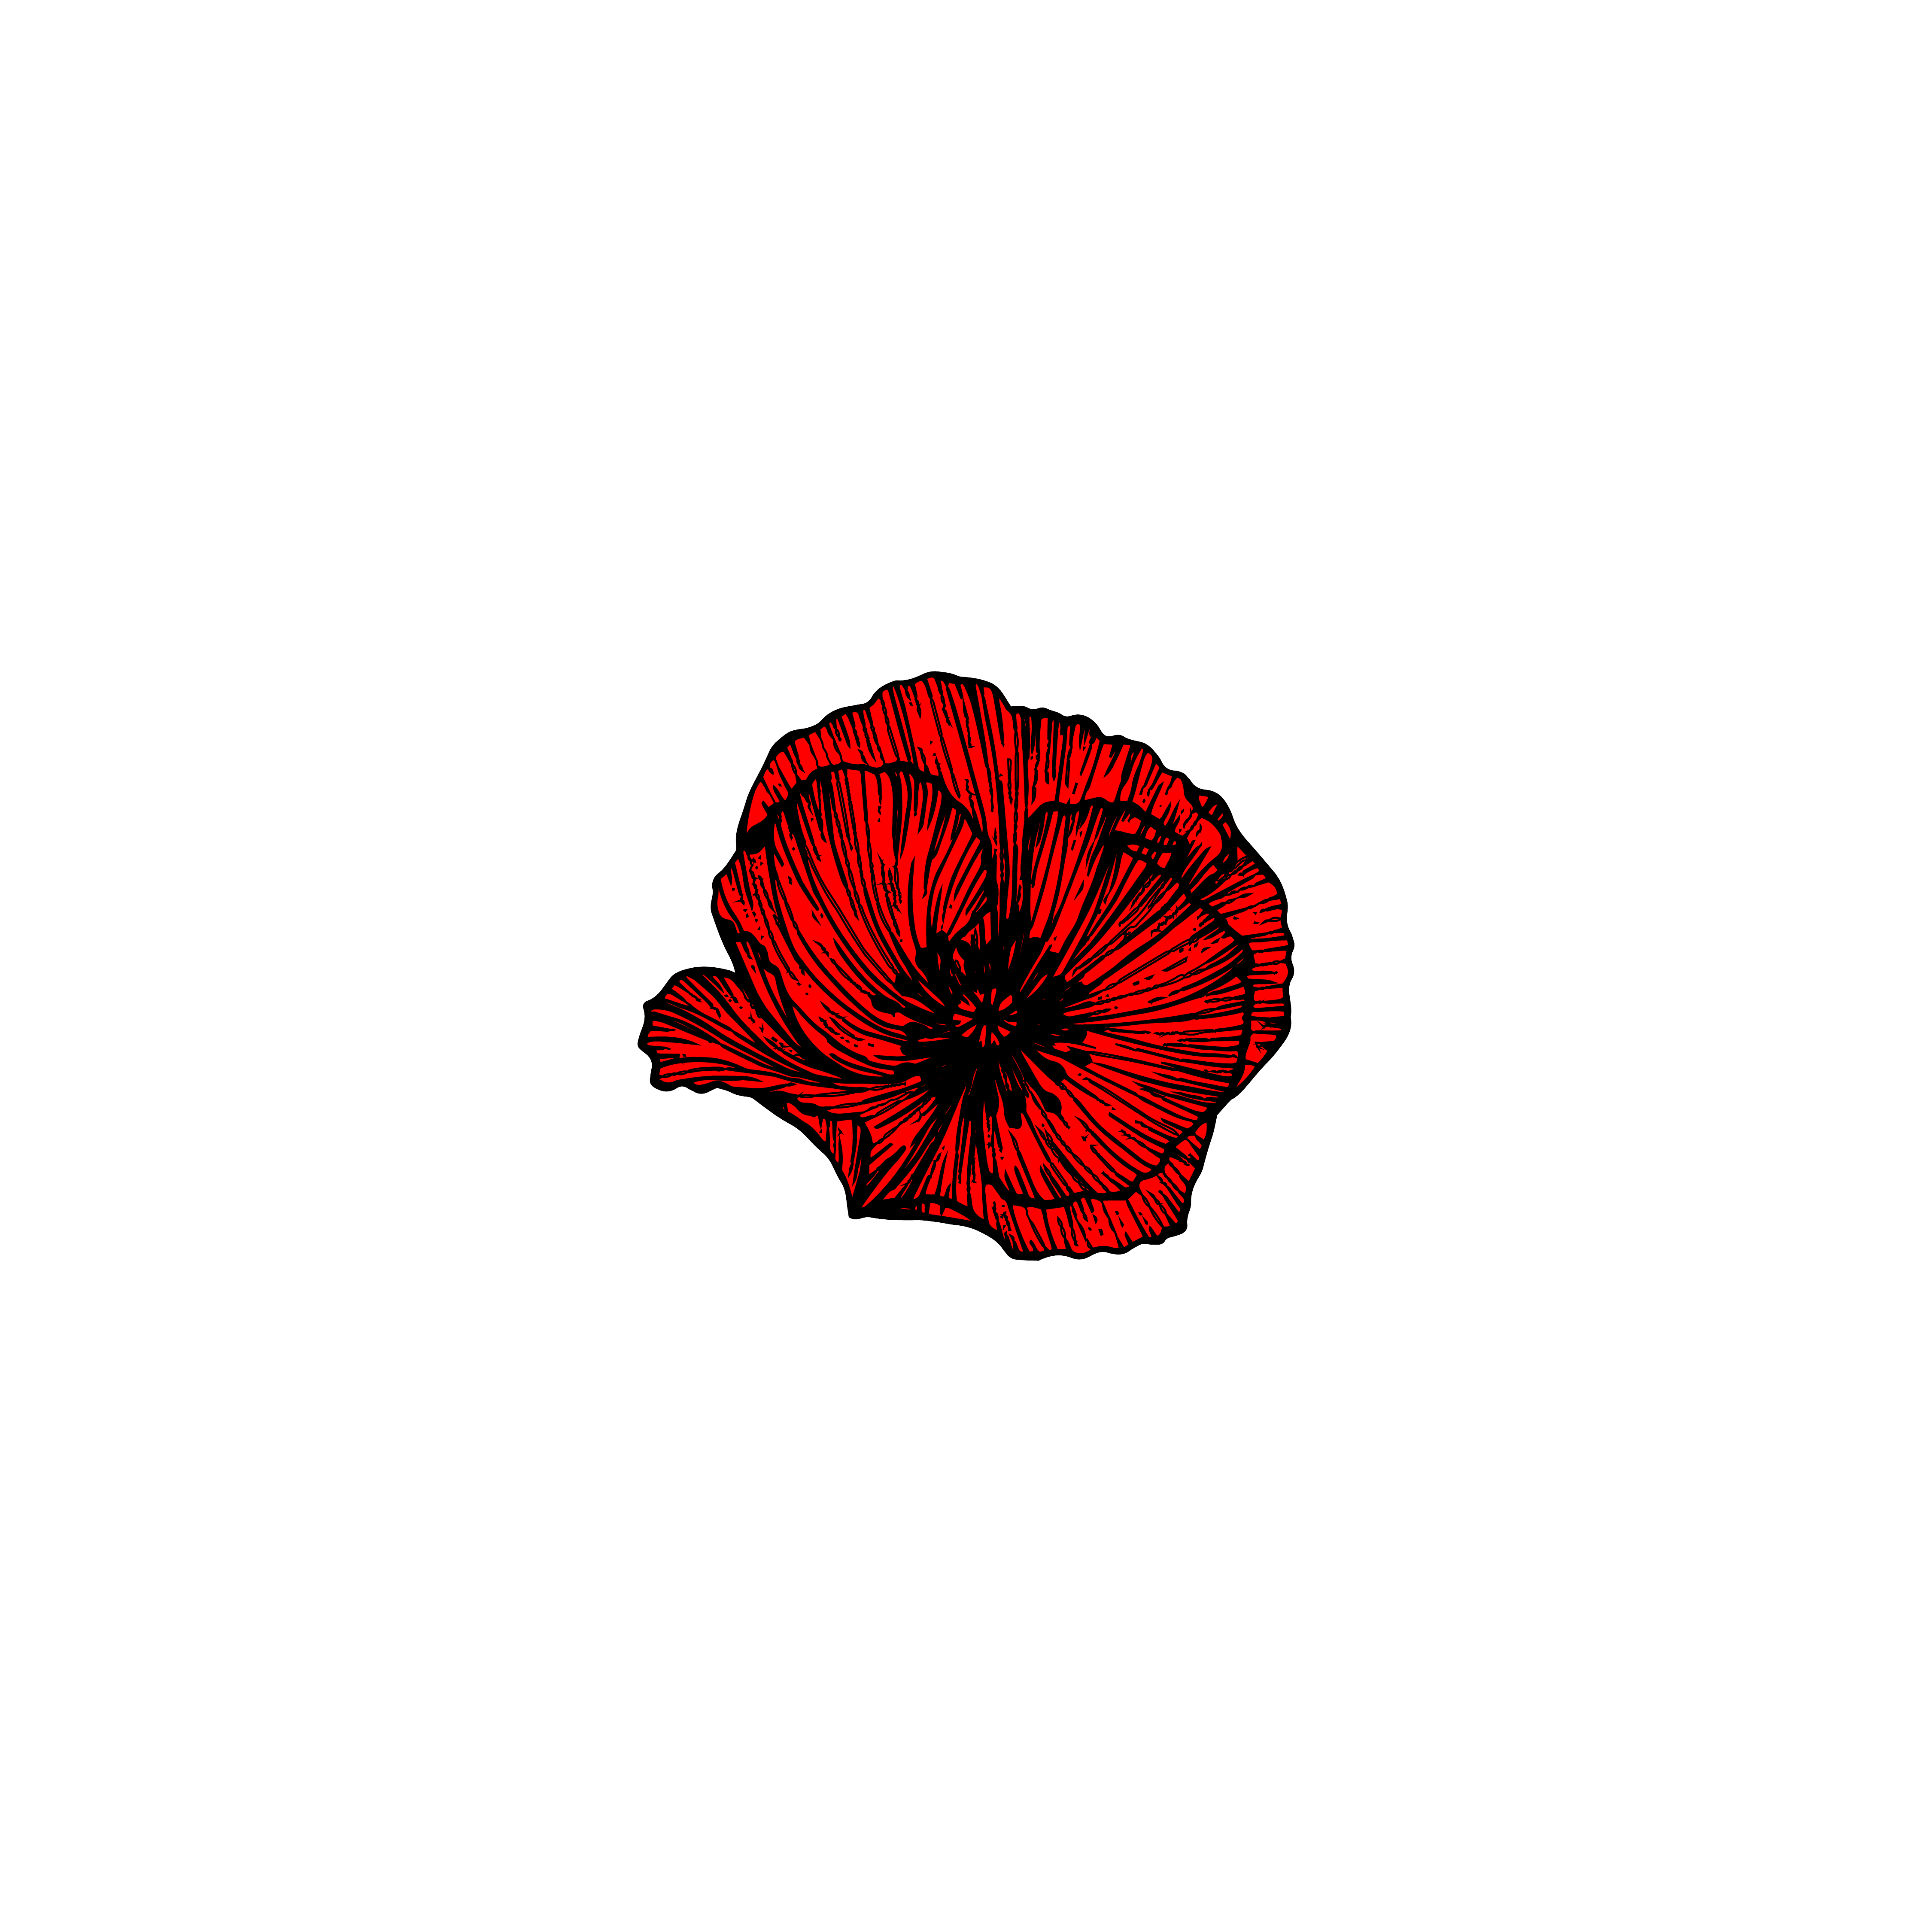 Pro-Palestine Zine Collective